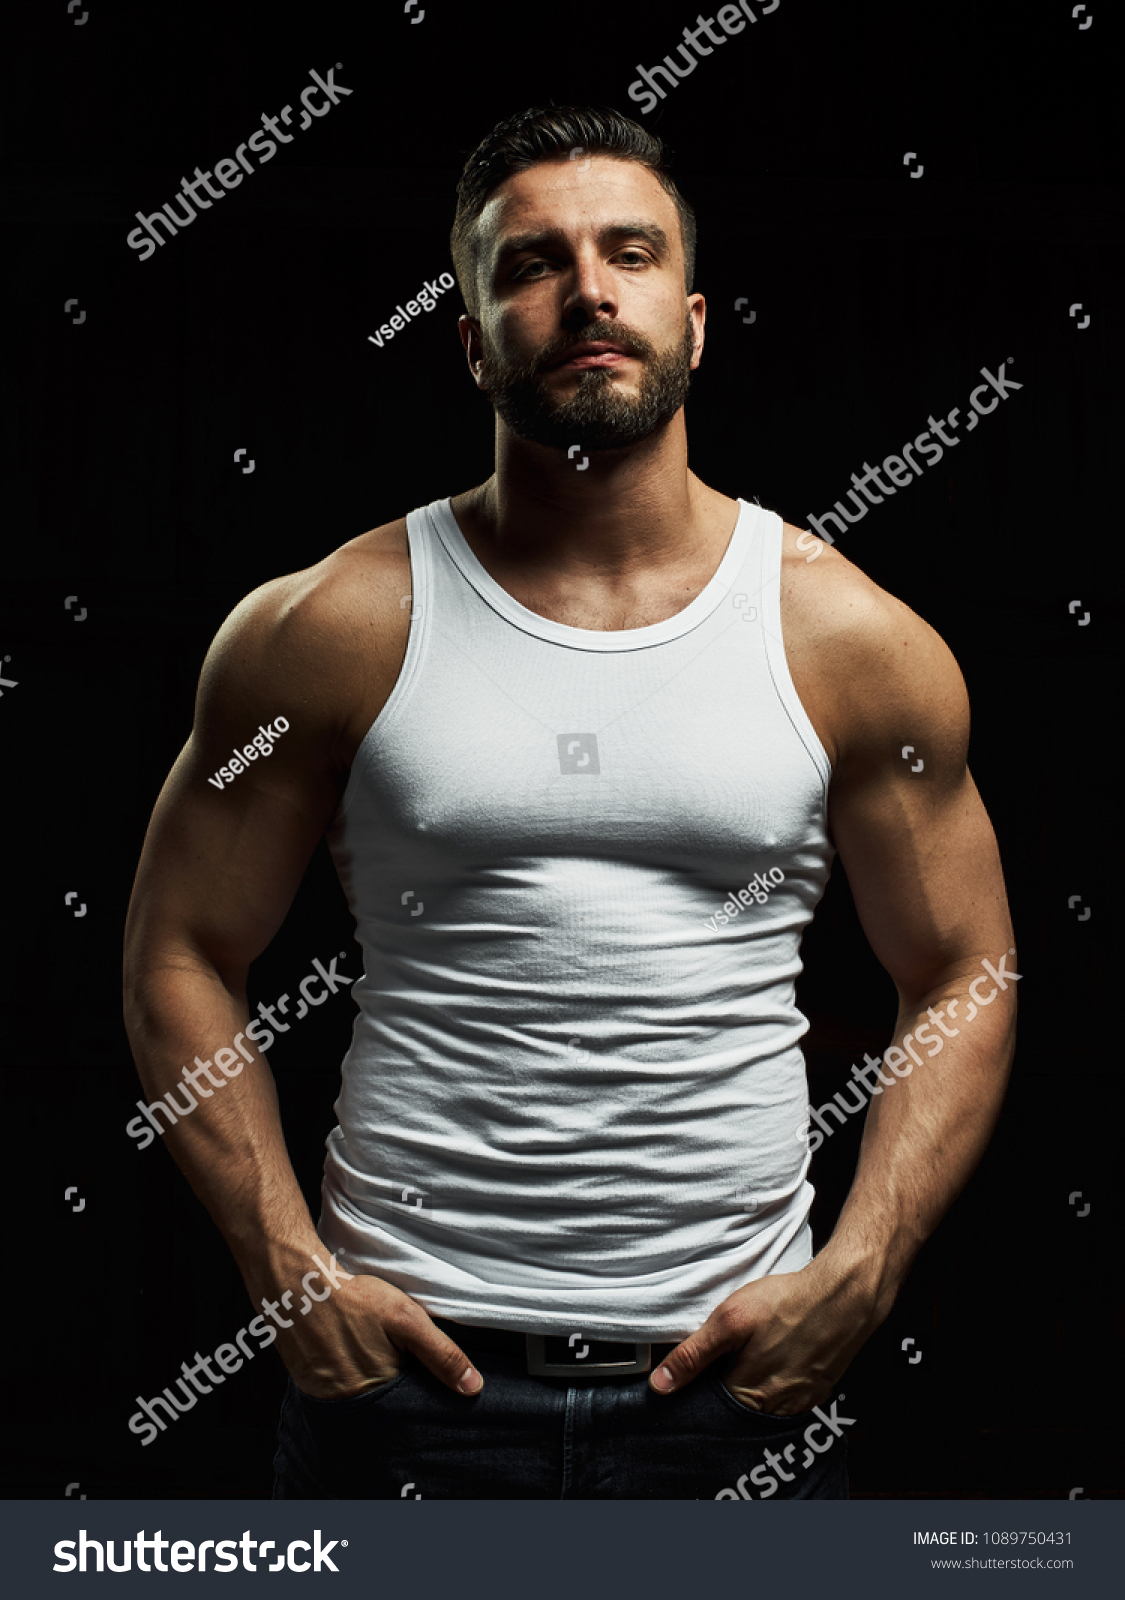 Strong Serious Muscular Man White Tshirt Stock Photo 1089750431 ...